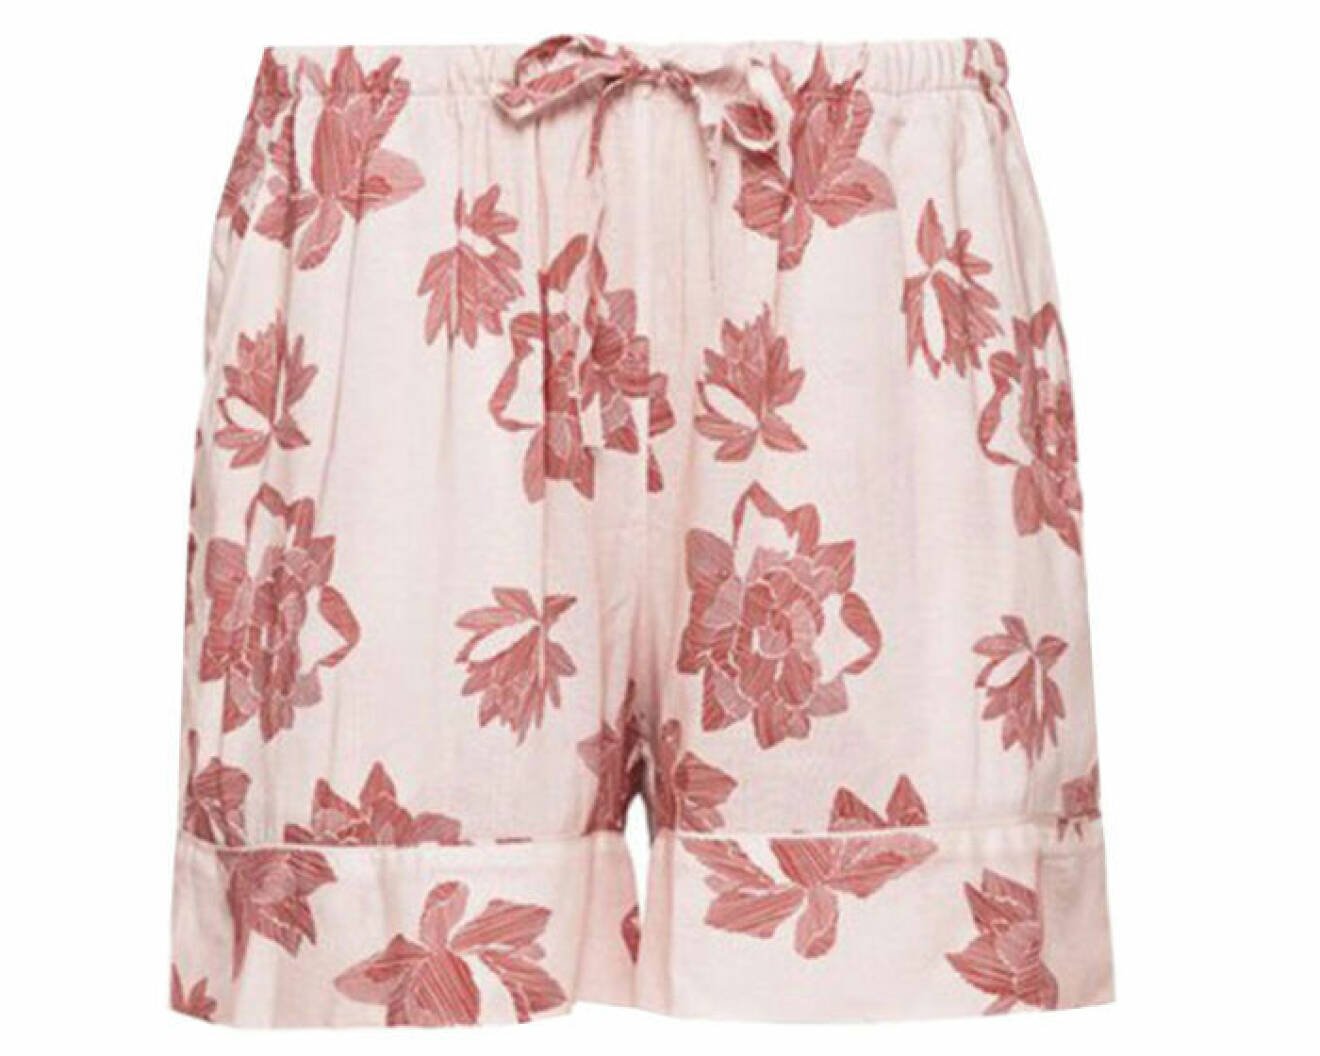 Rosa blommiga shorts